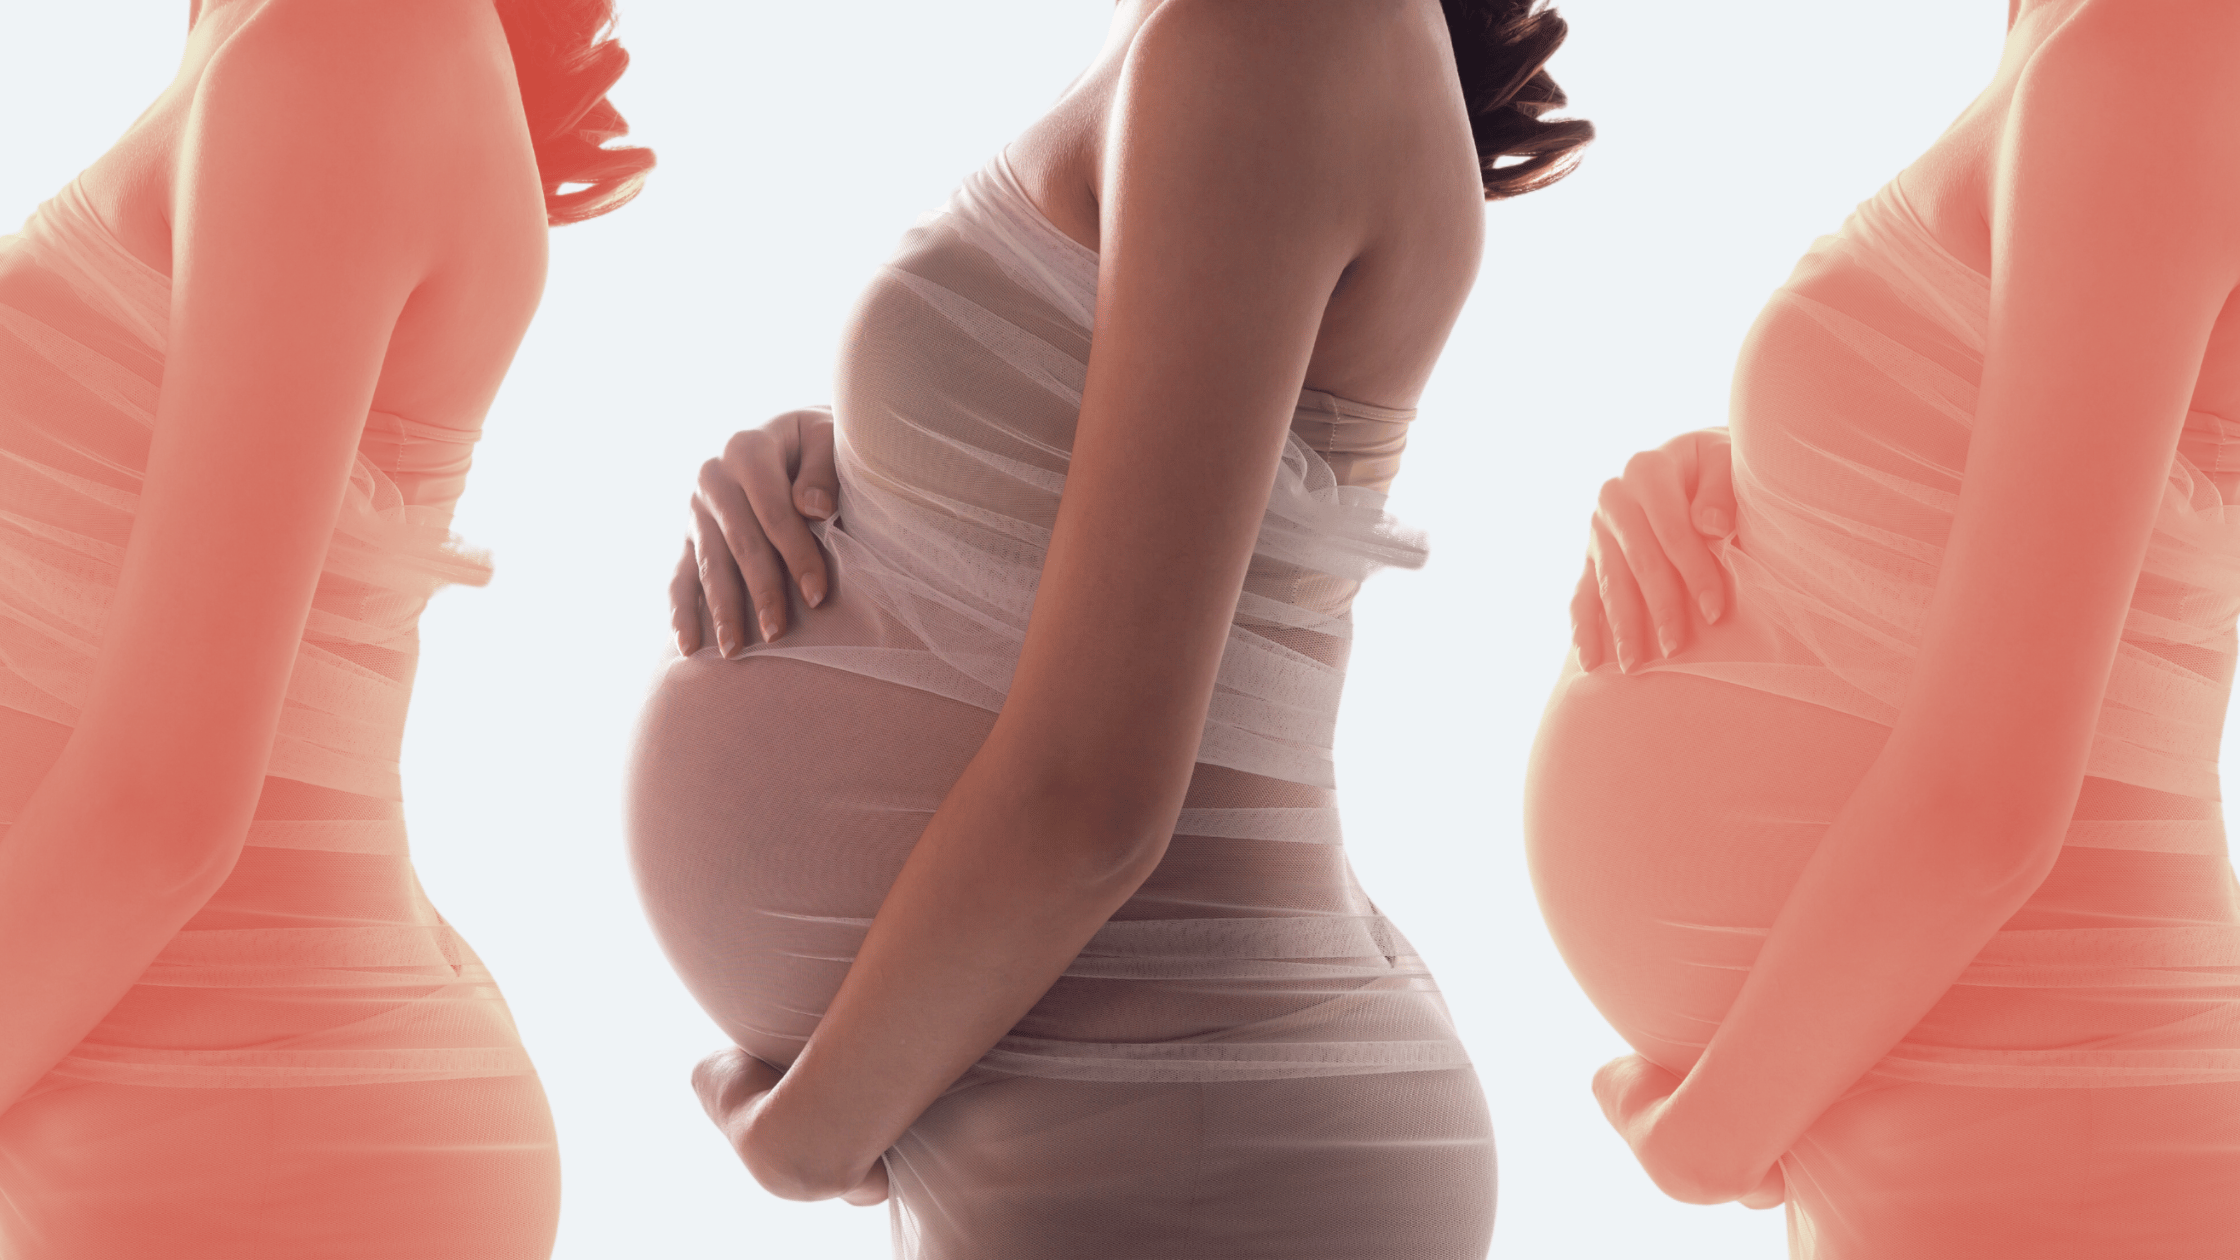 India's maternity act